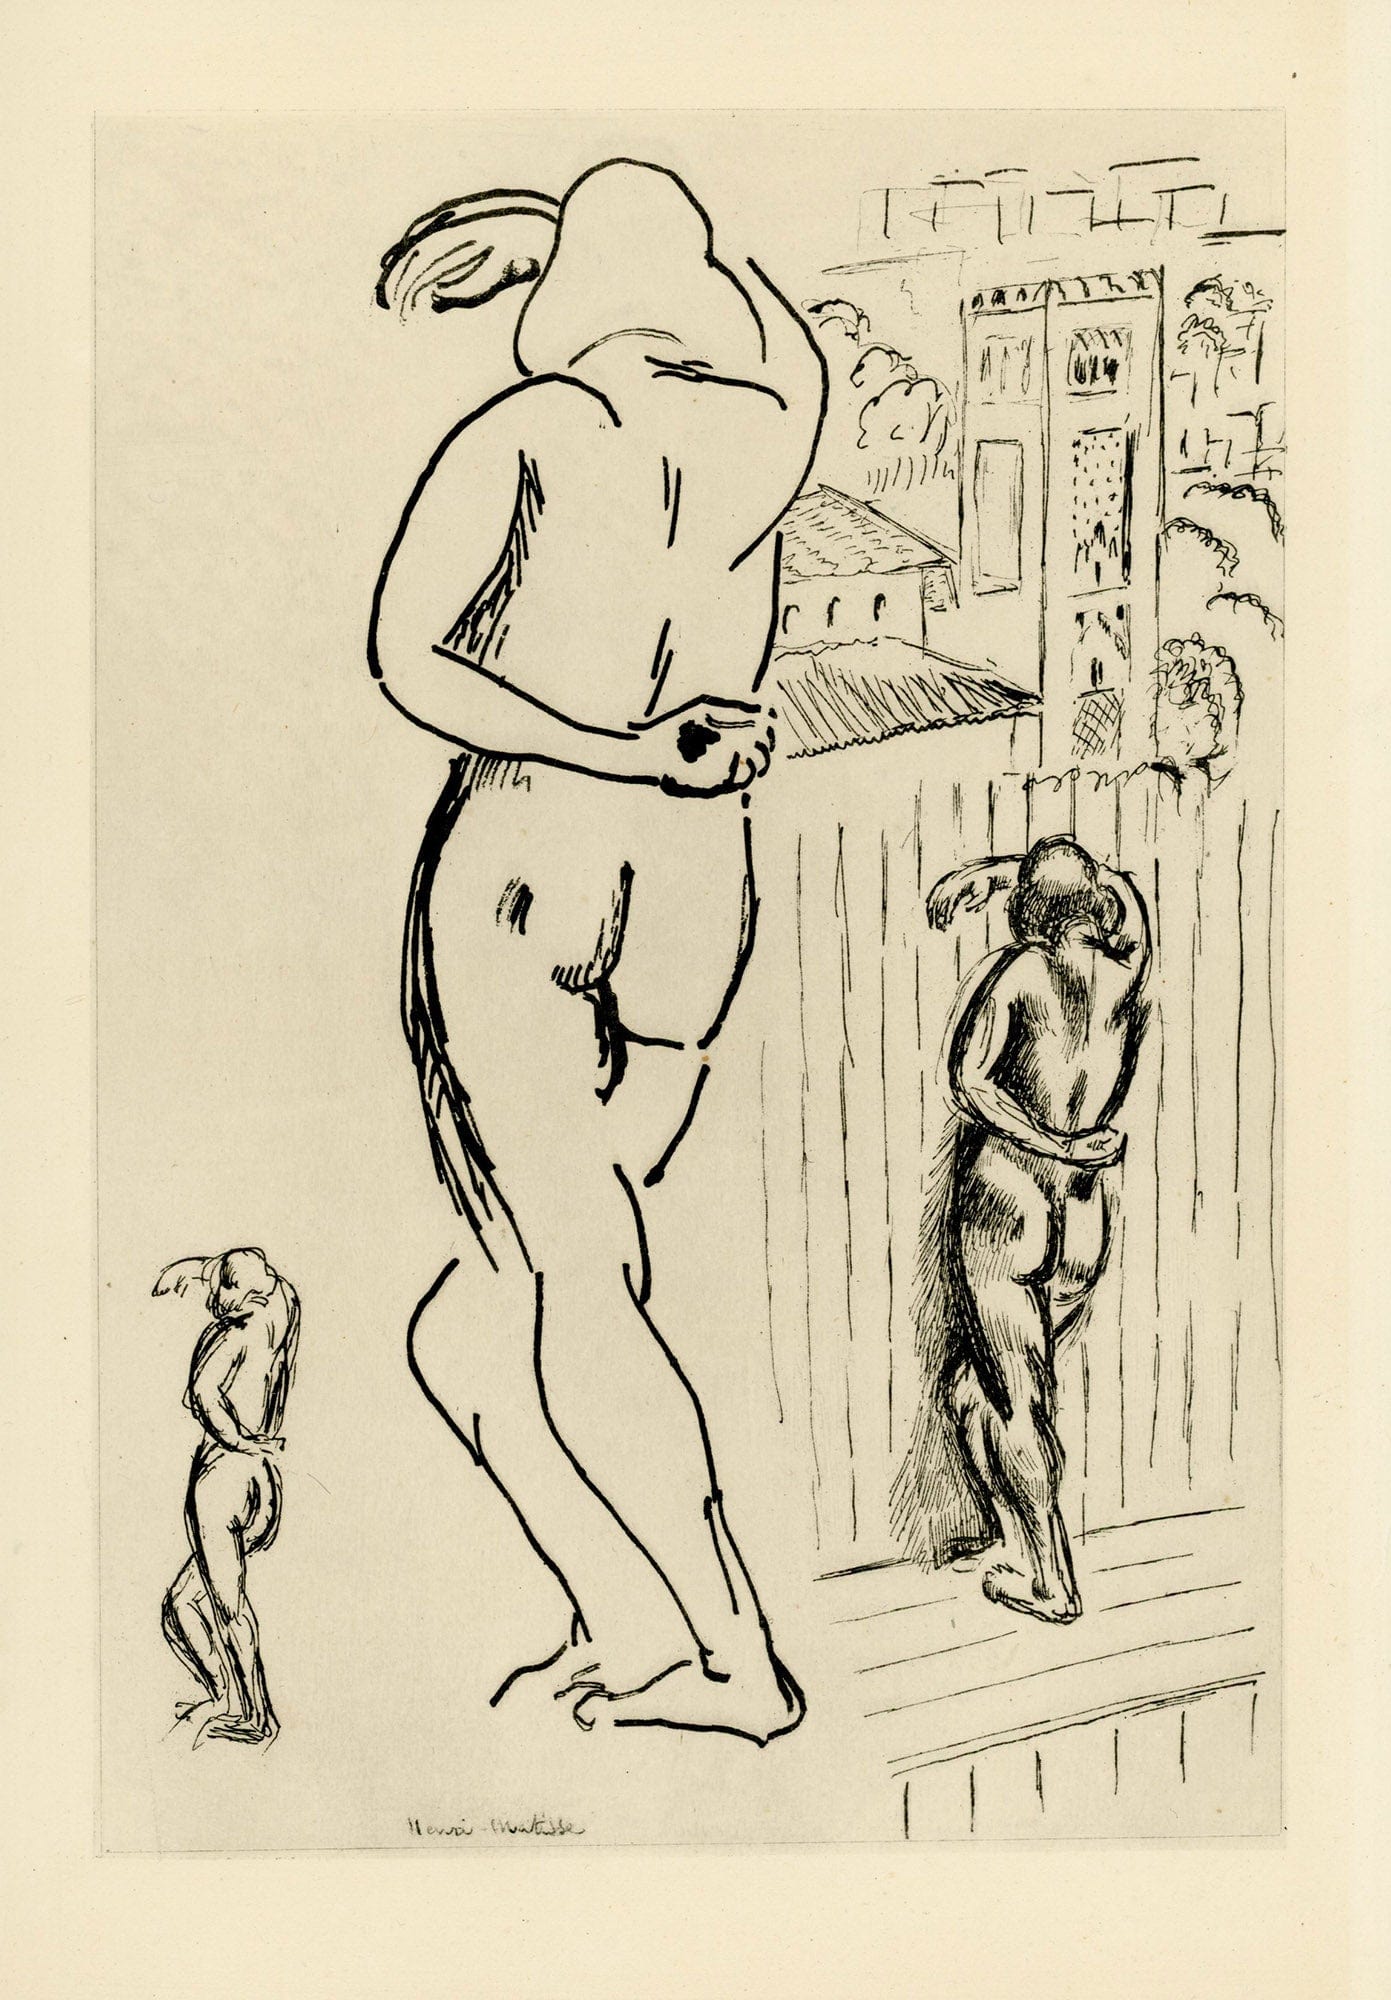 Henri Matisse - Planche II From "Cinquante Dessins"